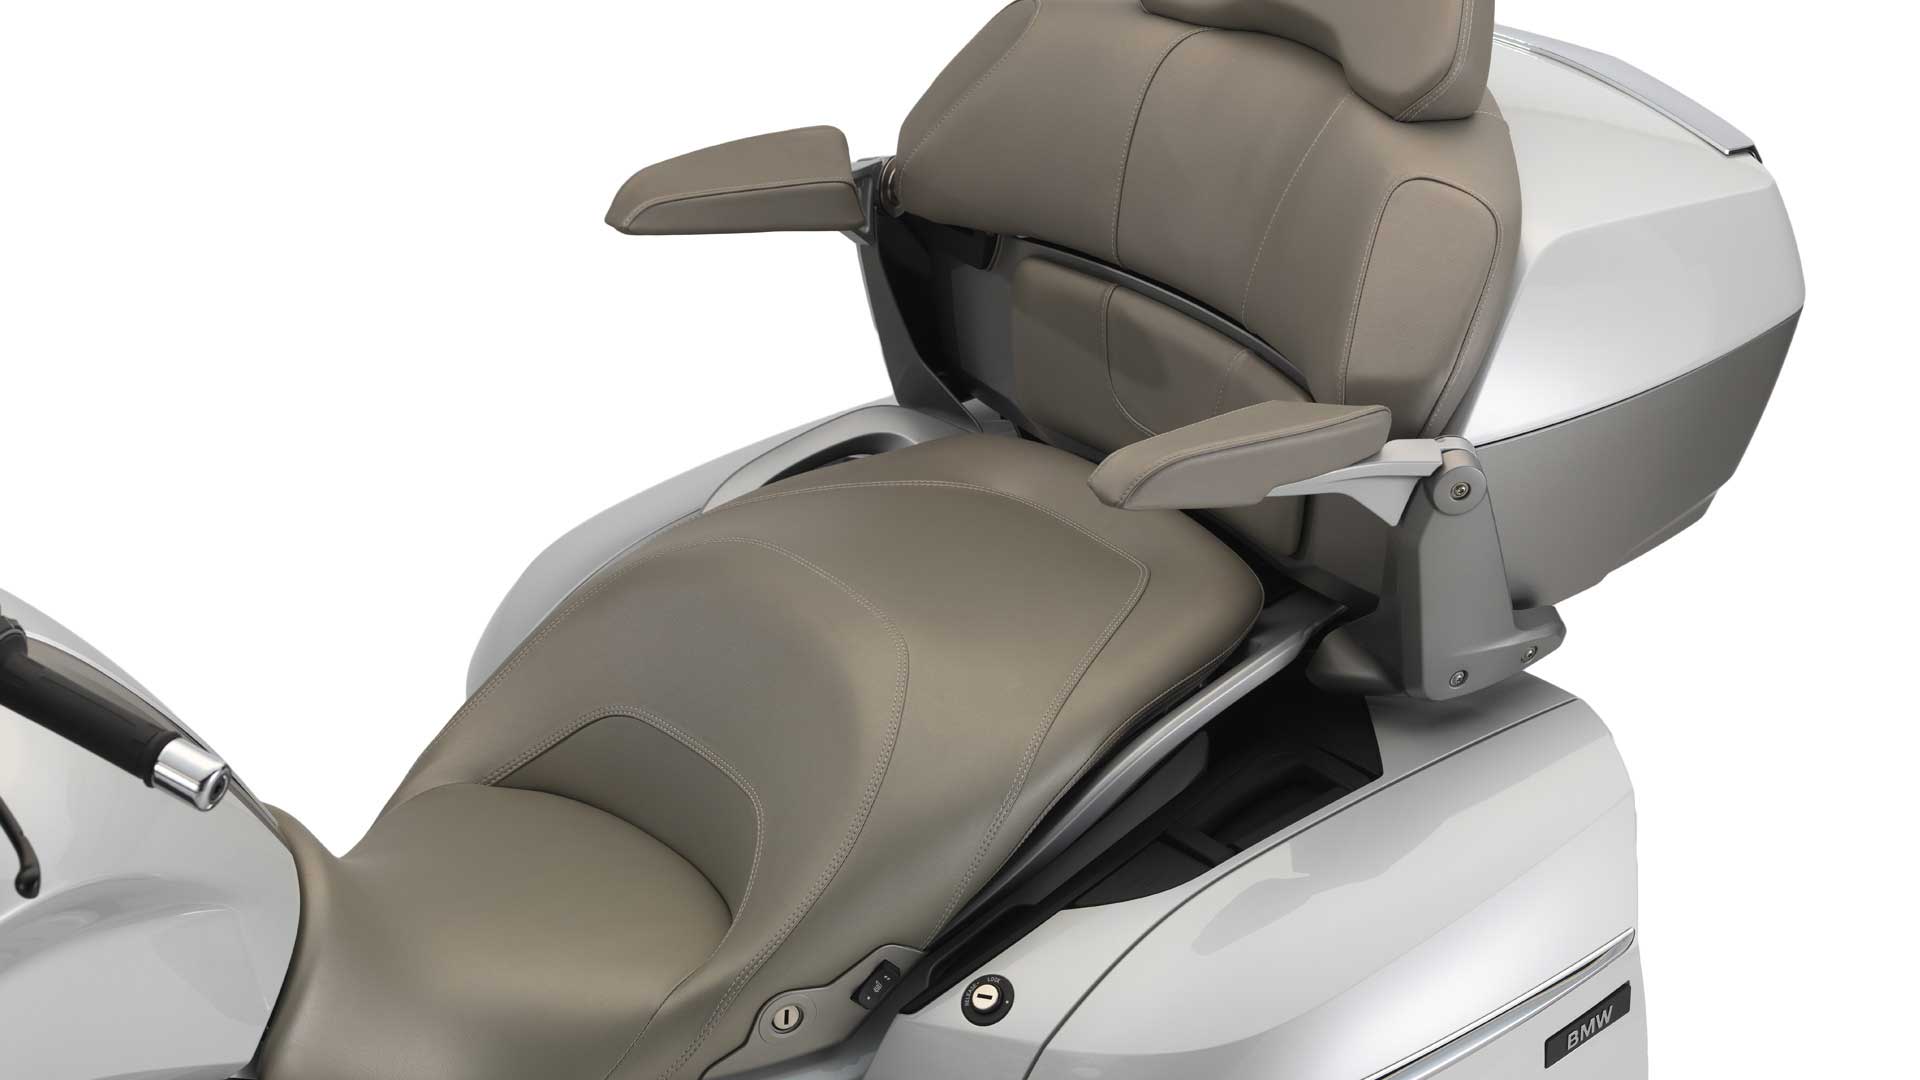 2014 BMW K 1600 GTL Exclusive seats